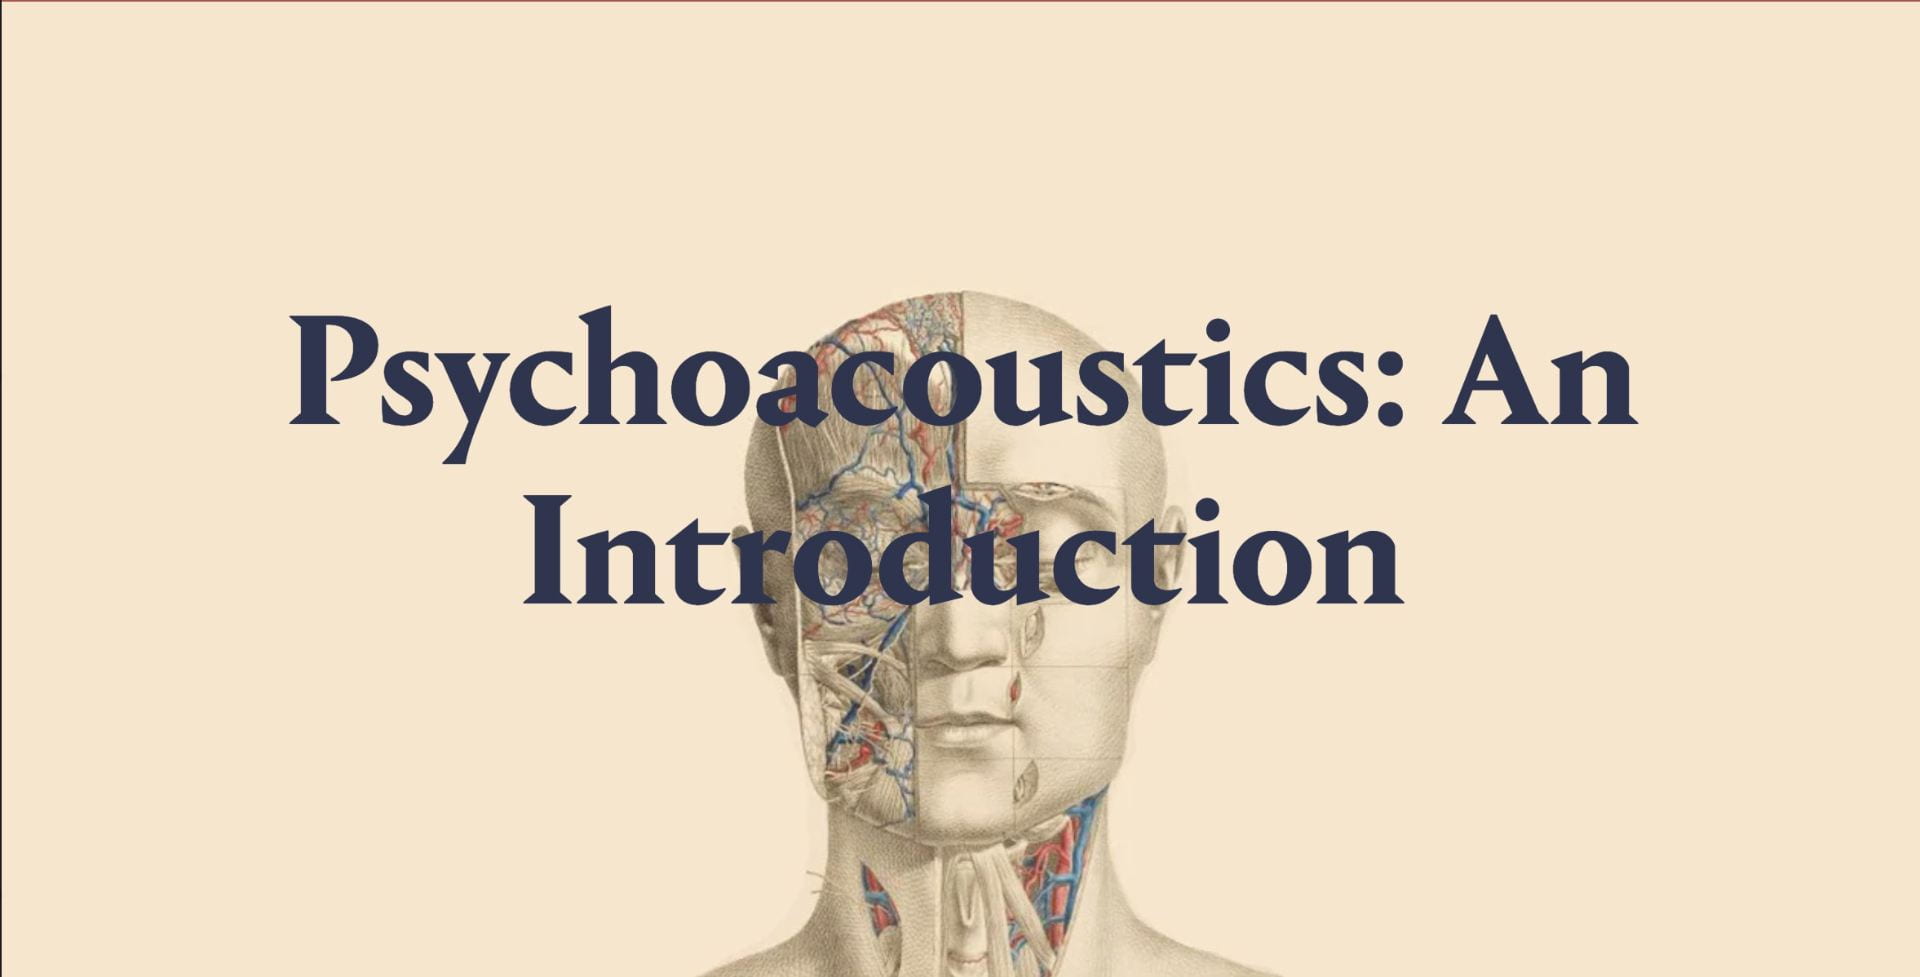 Psychoacoustics